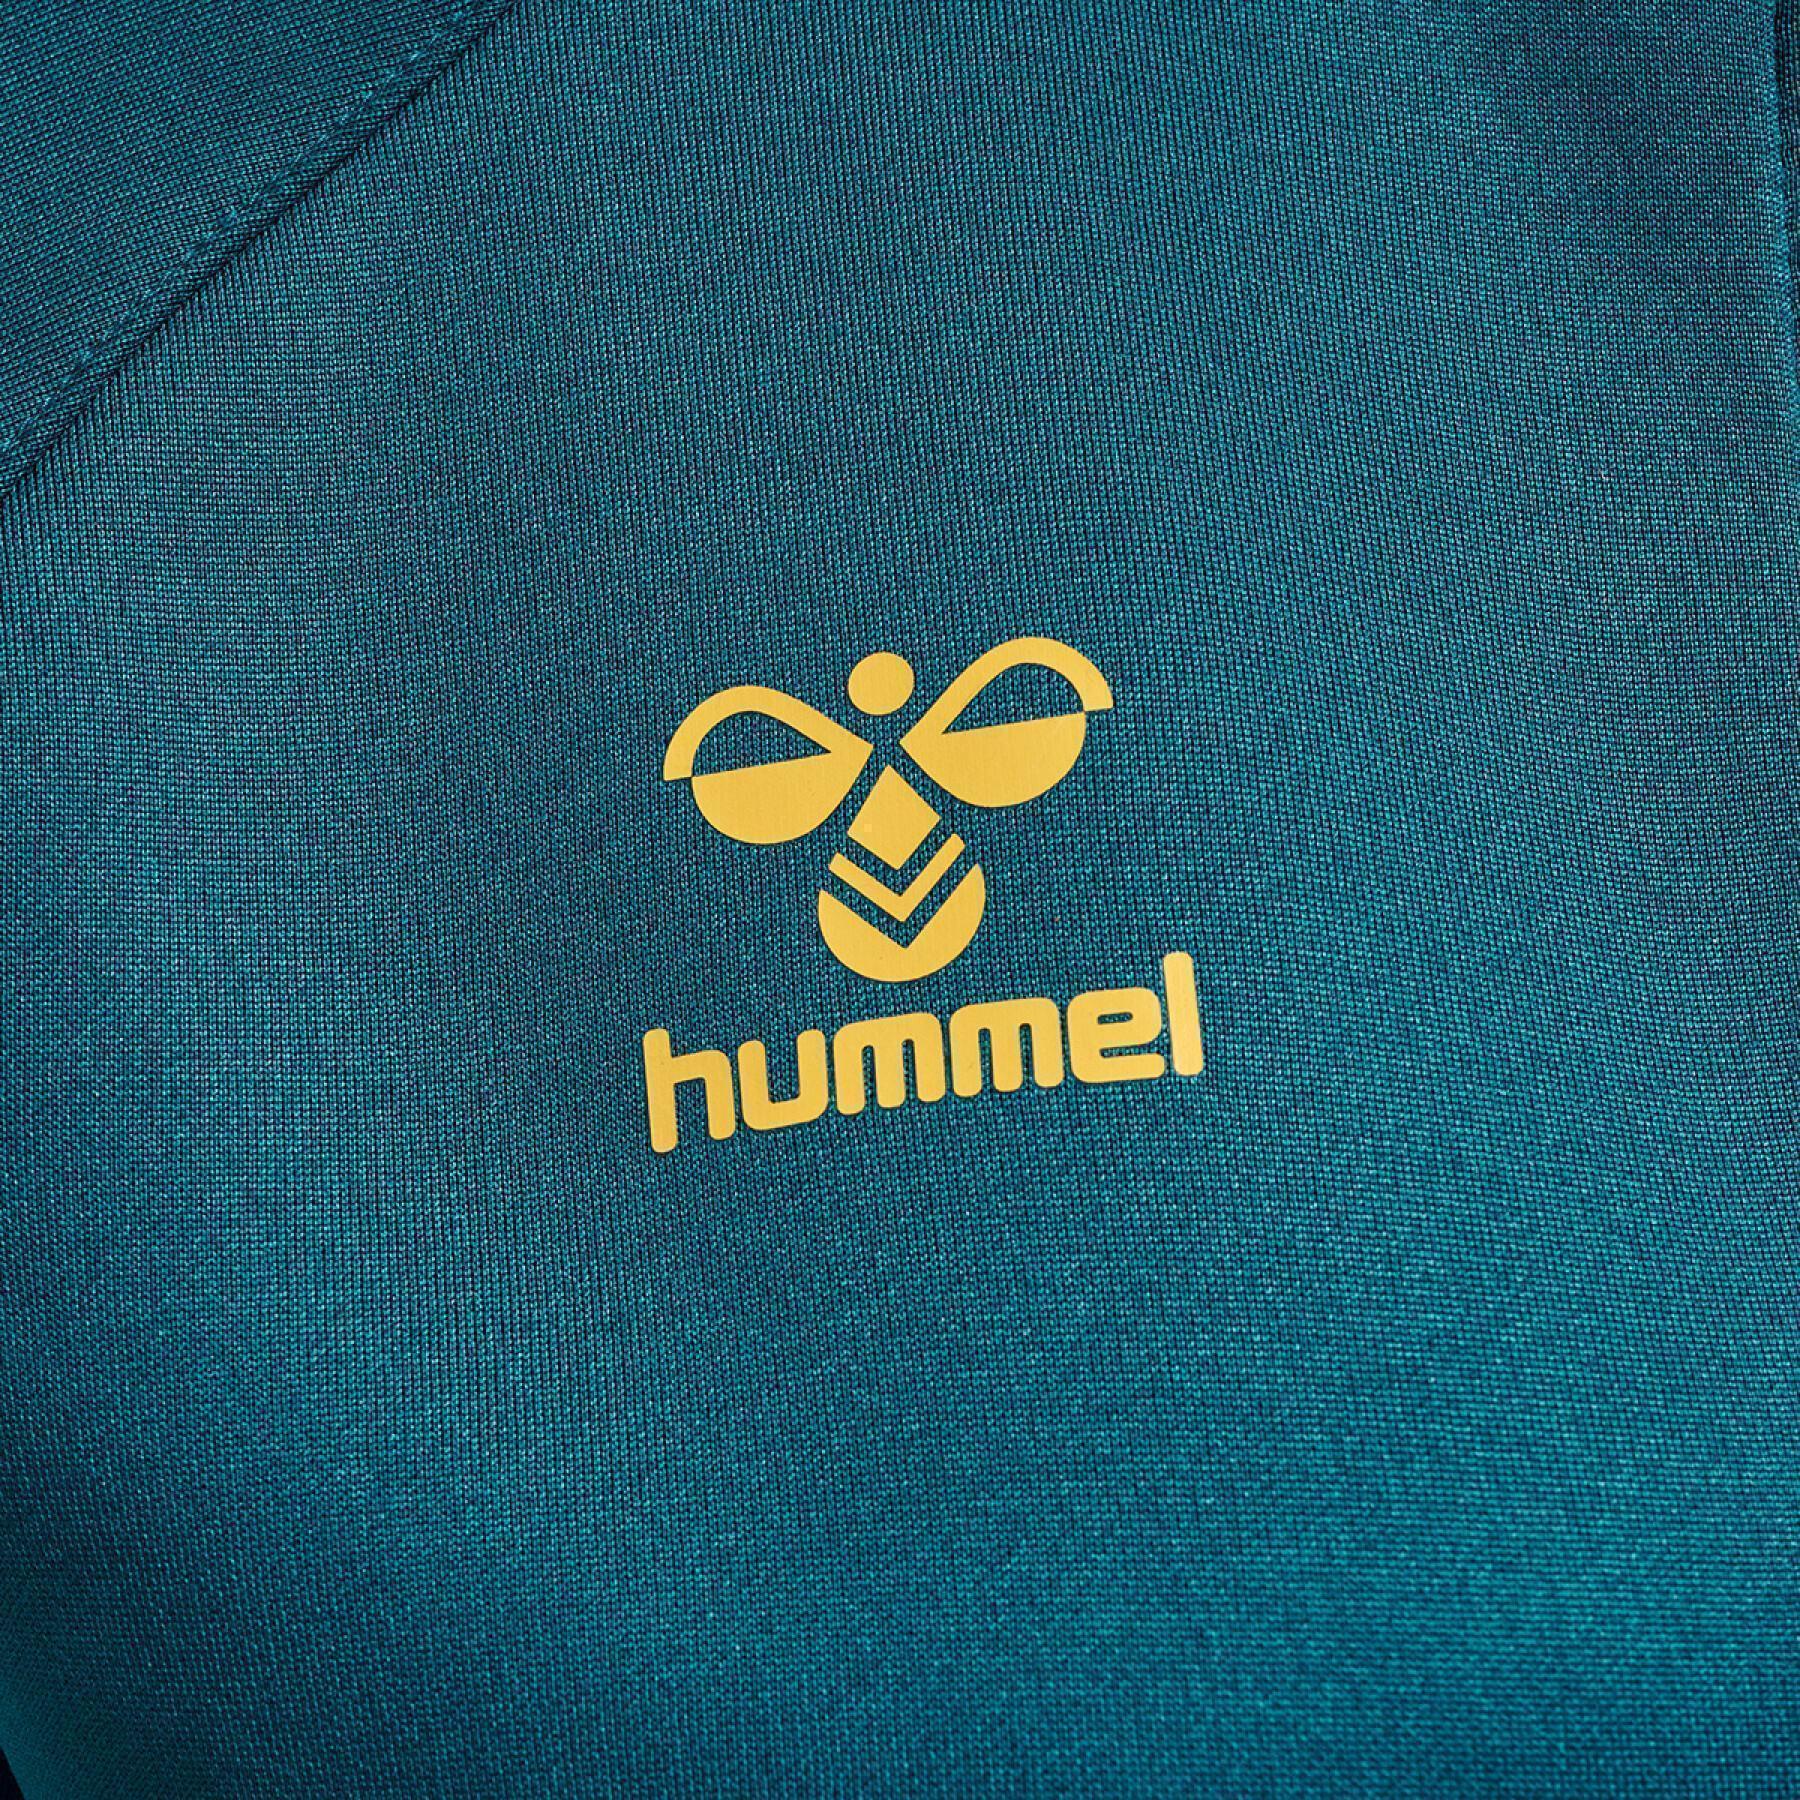 Trainingsjacke mit Reißverschluss Frau Hummel Cima XK